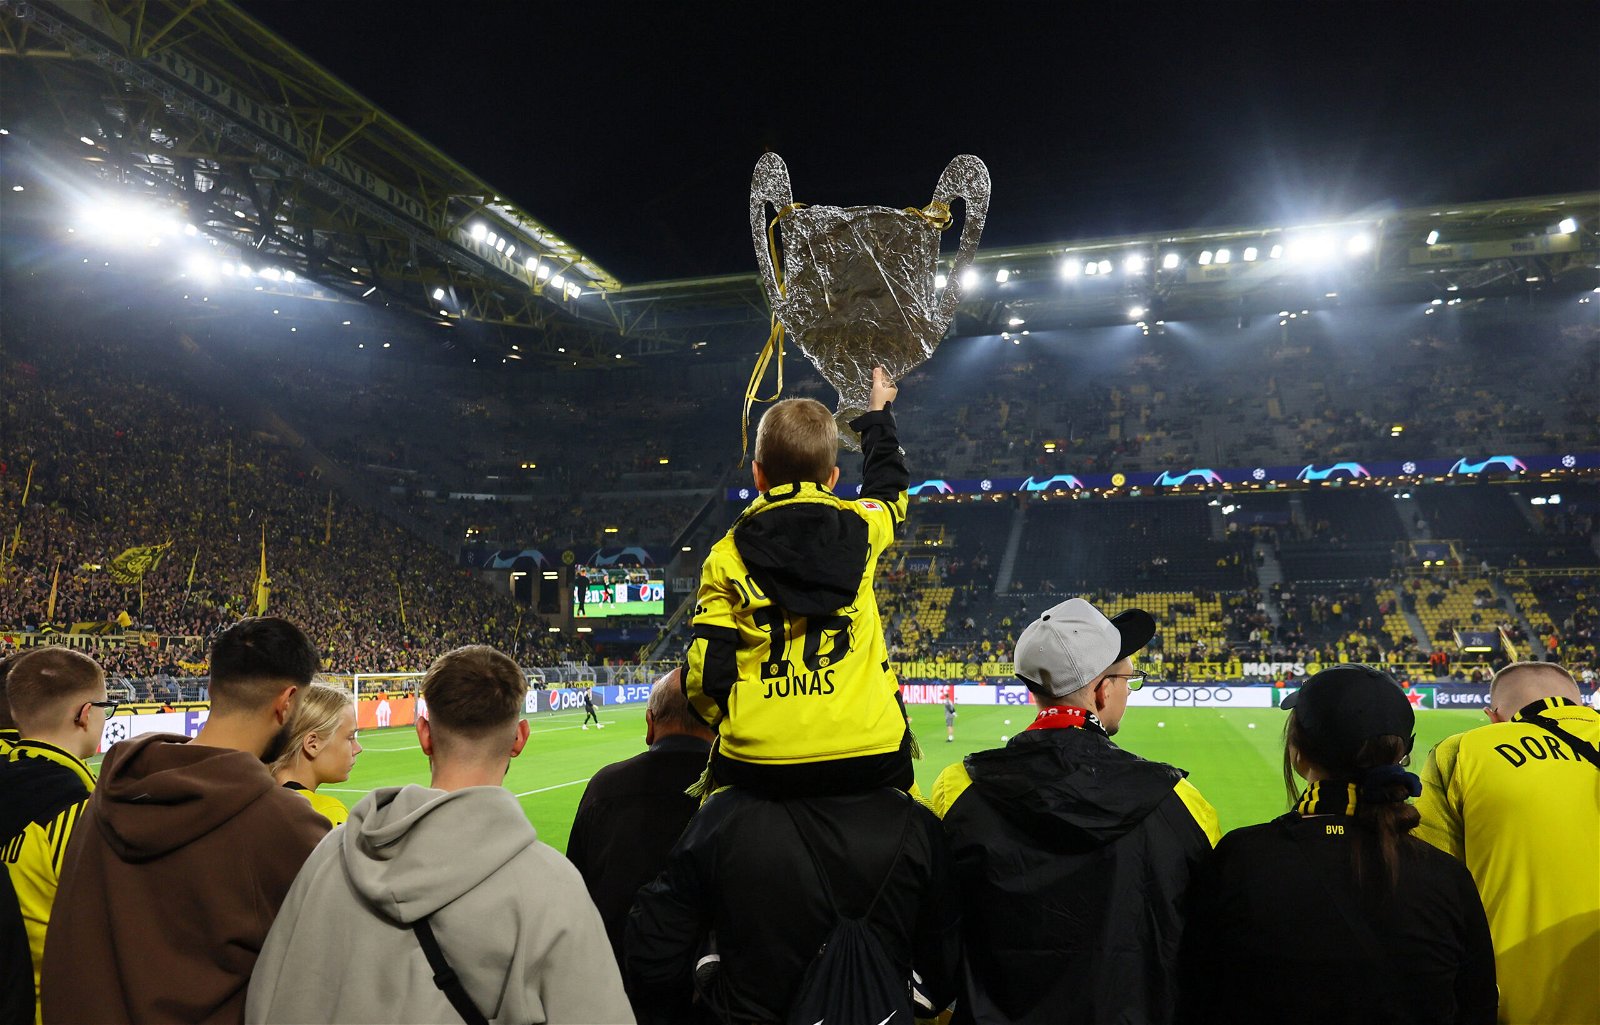 How many times have Borussia Dortmund won Champions League